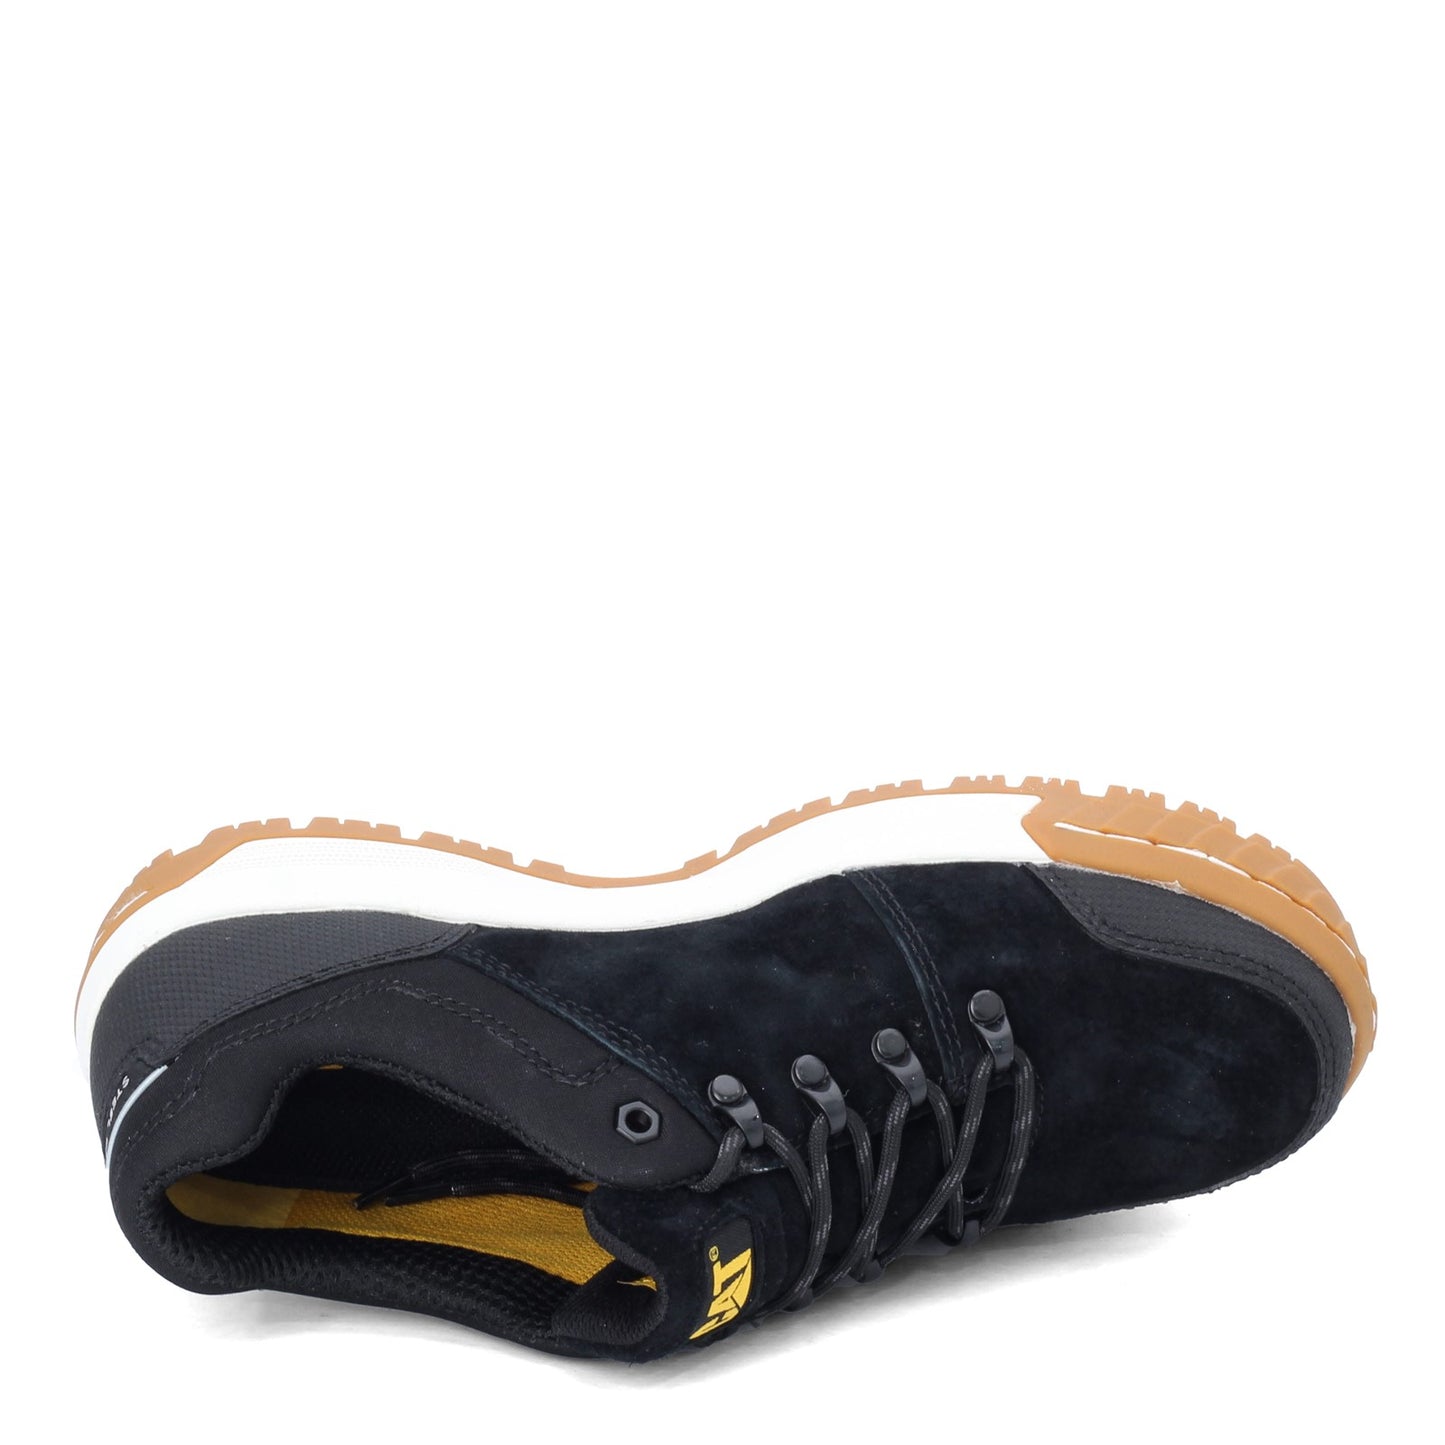 Peltz Shoes  Men's Caterpillar Converge Steel Toe Sneaker BLACK P91029